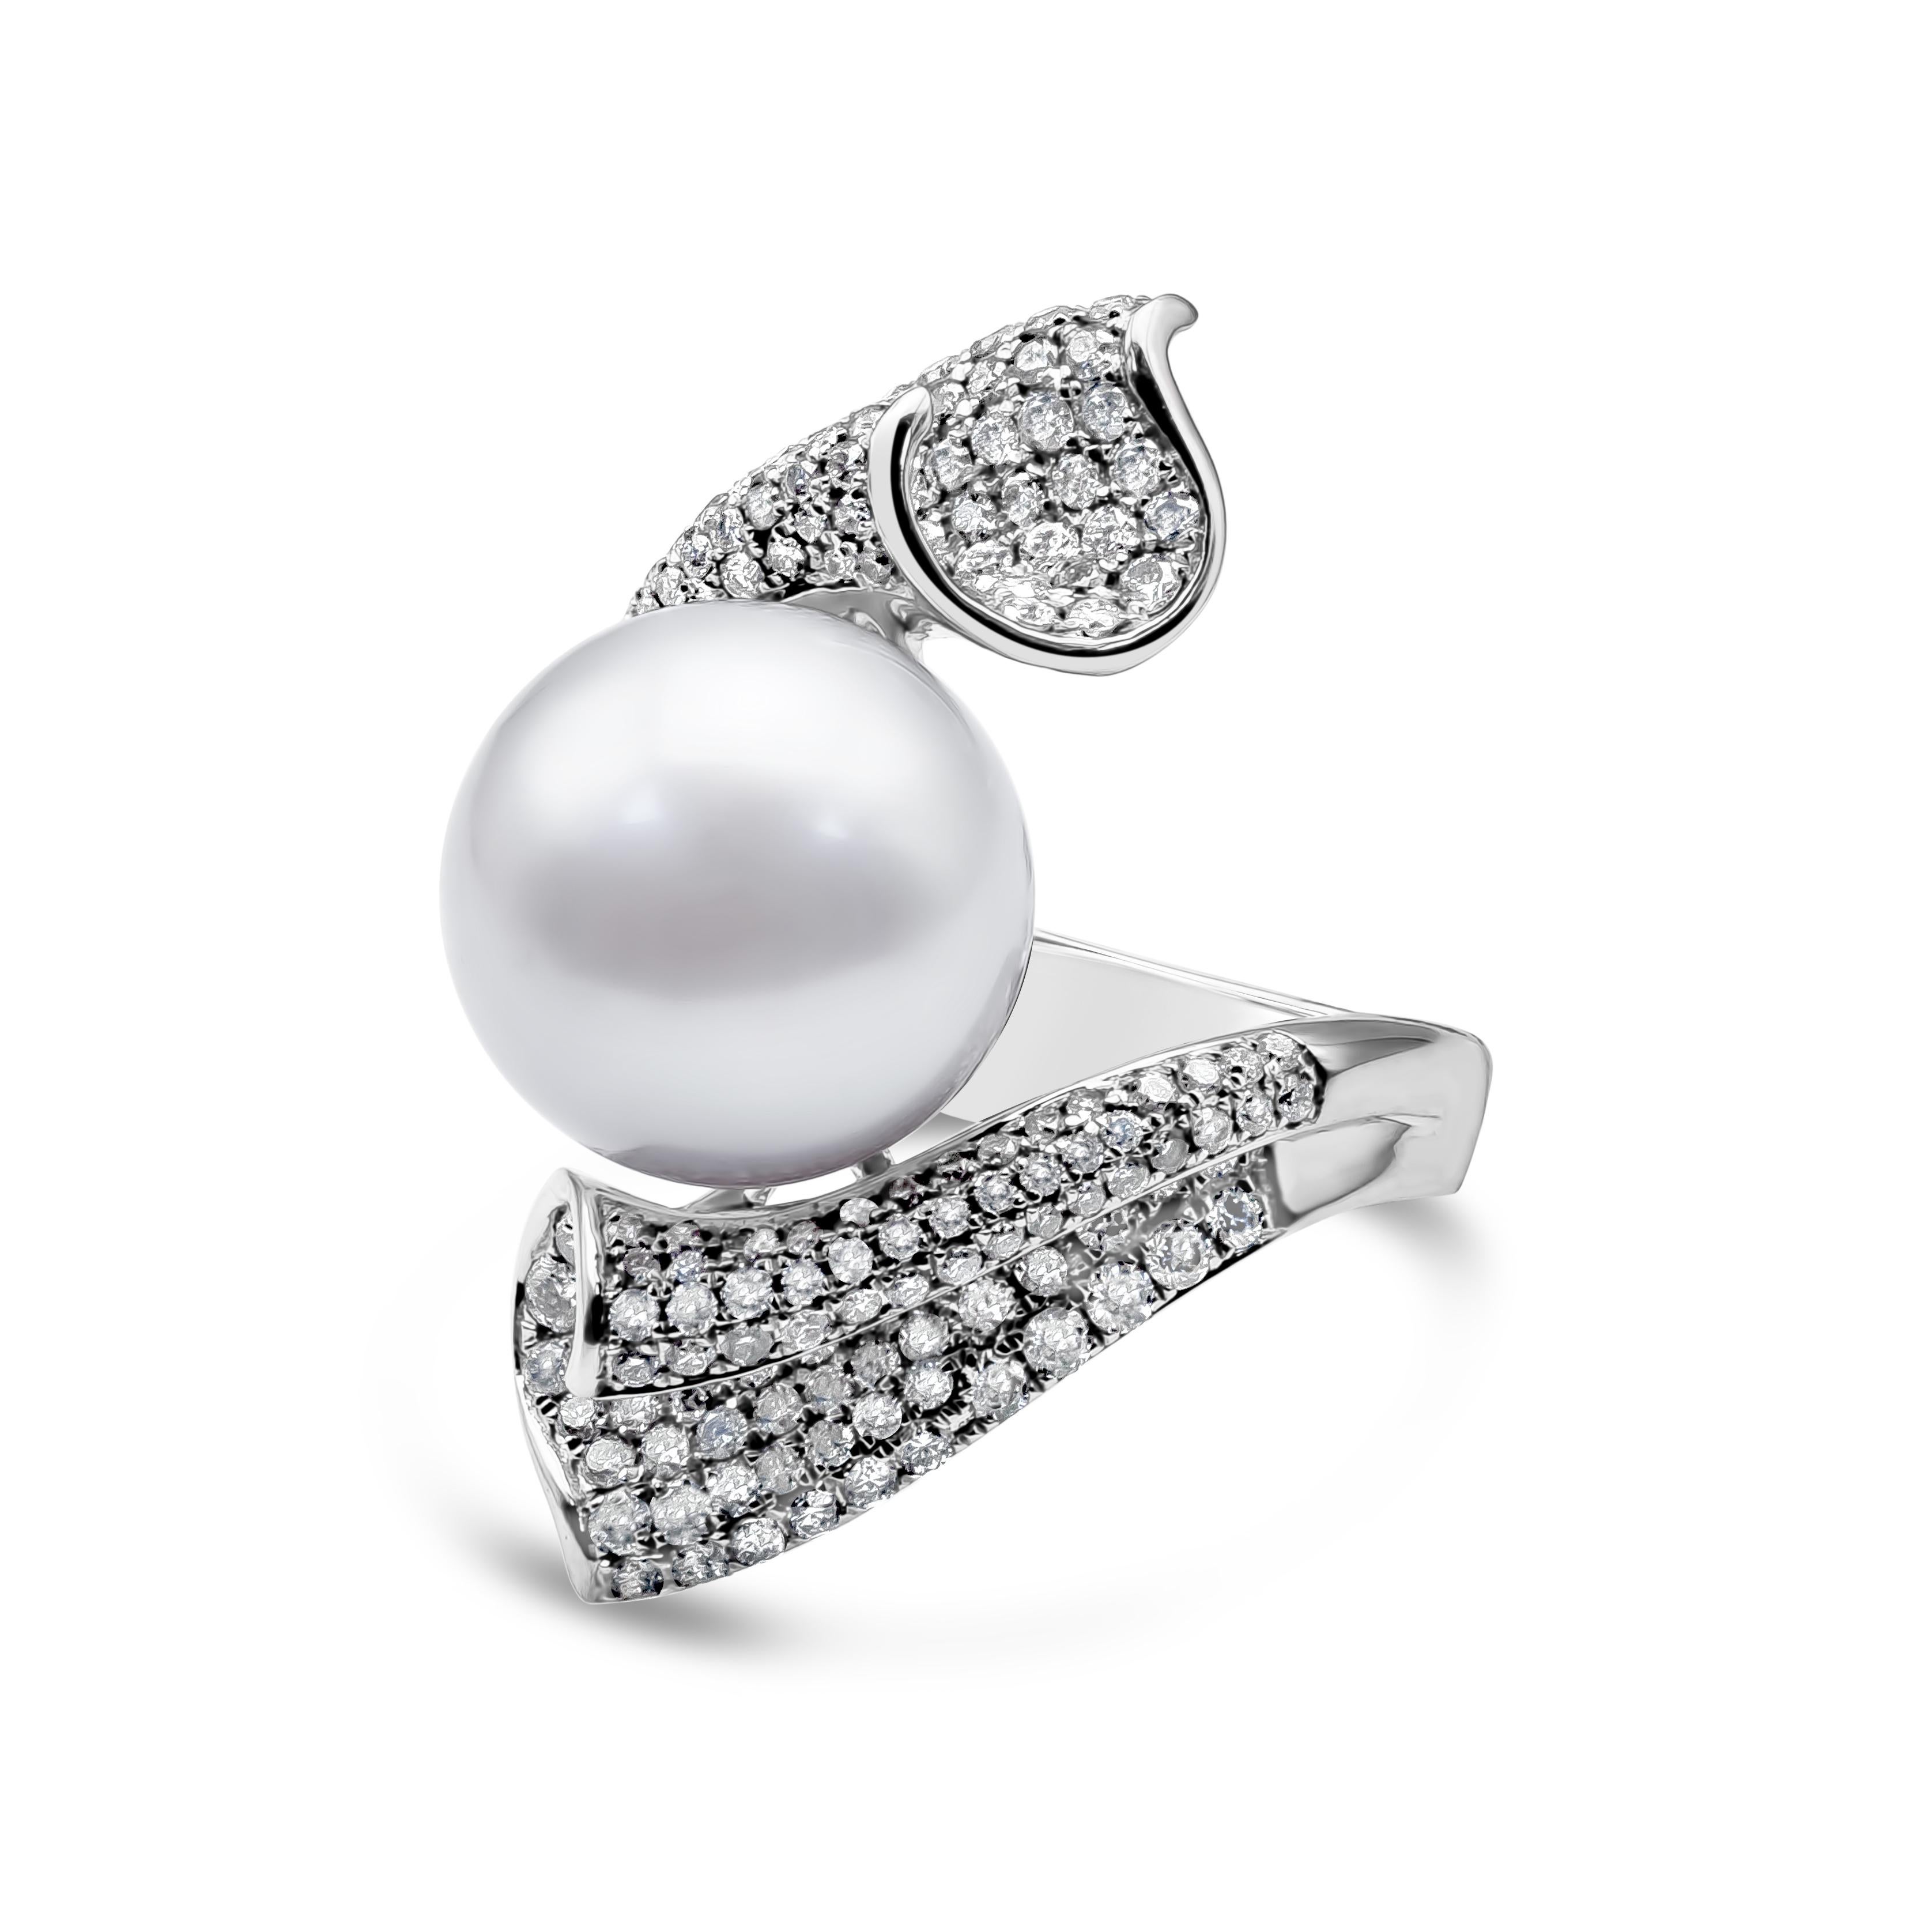 Contemporary Roman Malakov 1.44 Carat Diamond And South Sea Pearl Cocktail Fashion Ring For Sale